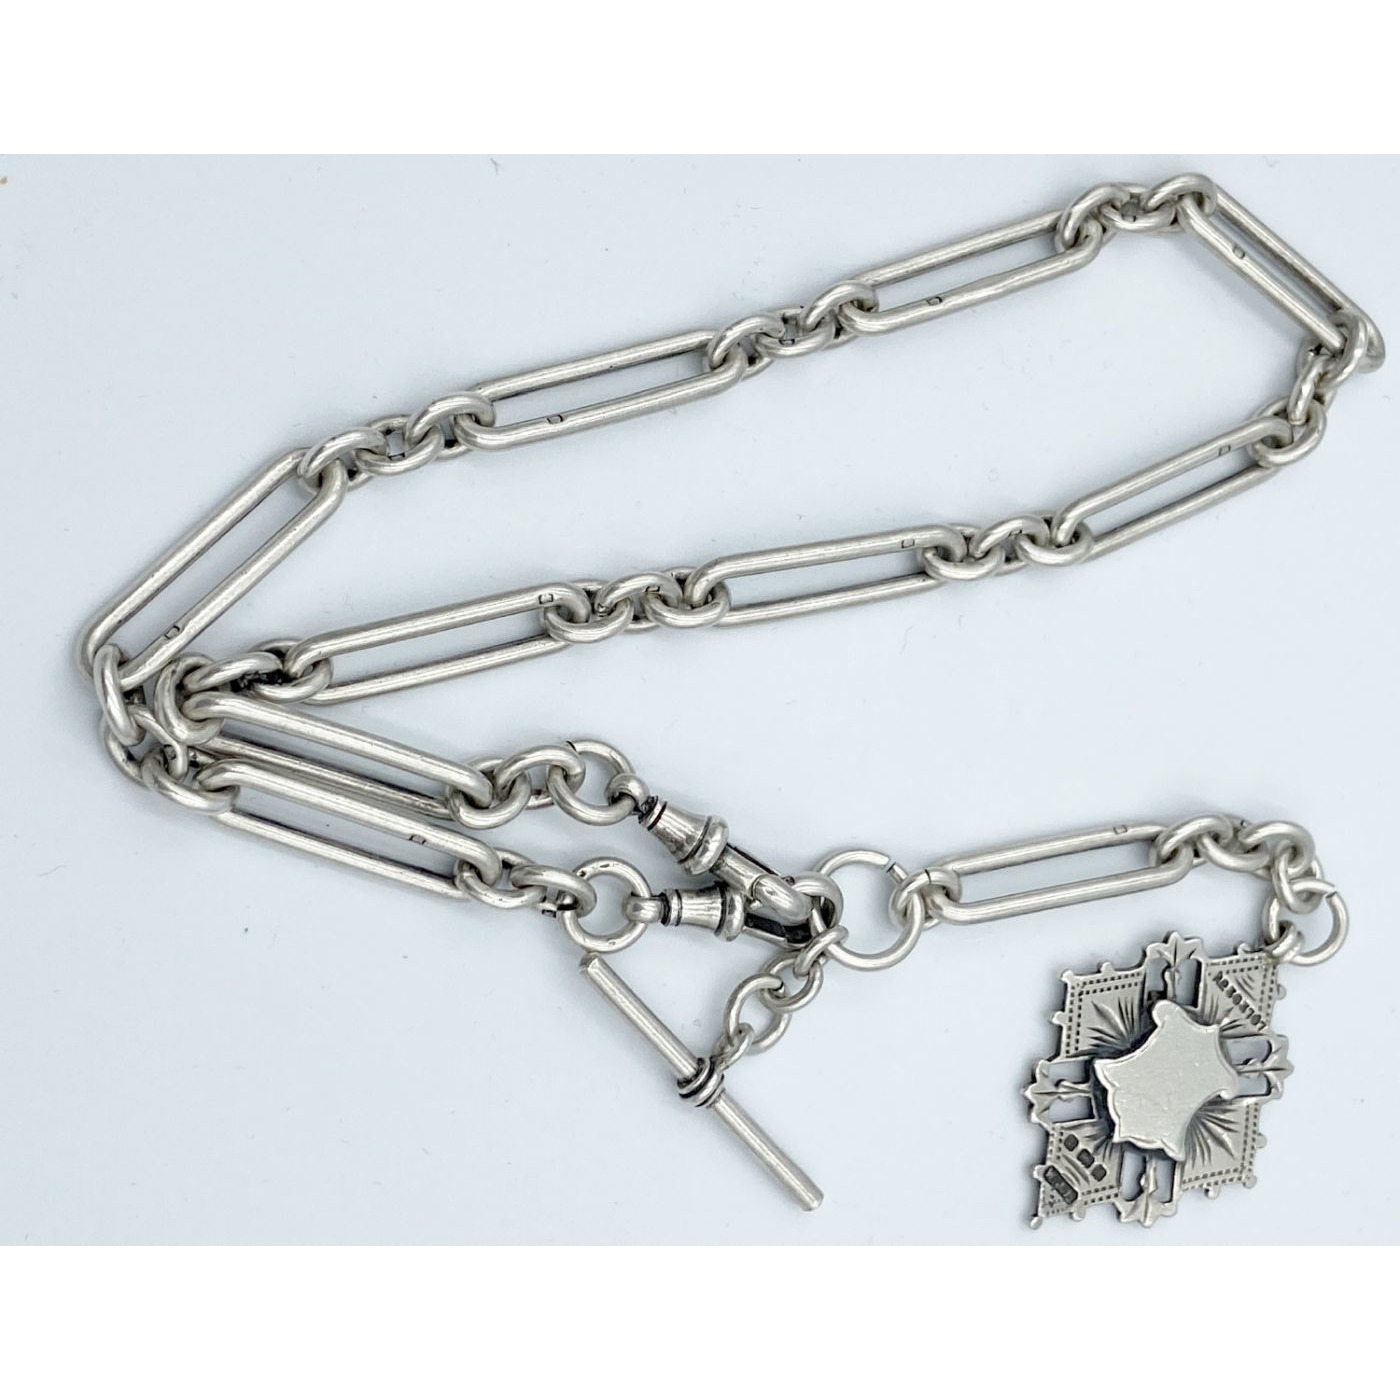 Tremendous 18" Victorian English Silver Watch Chain Trombone Link